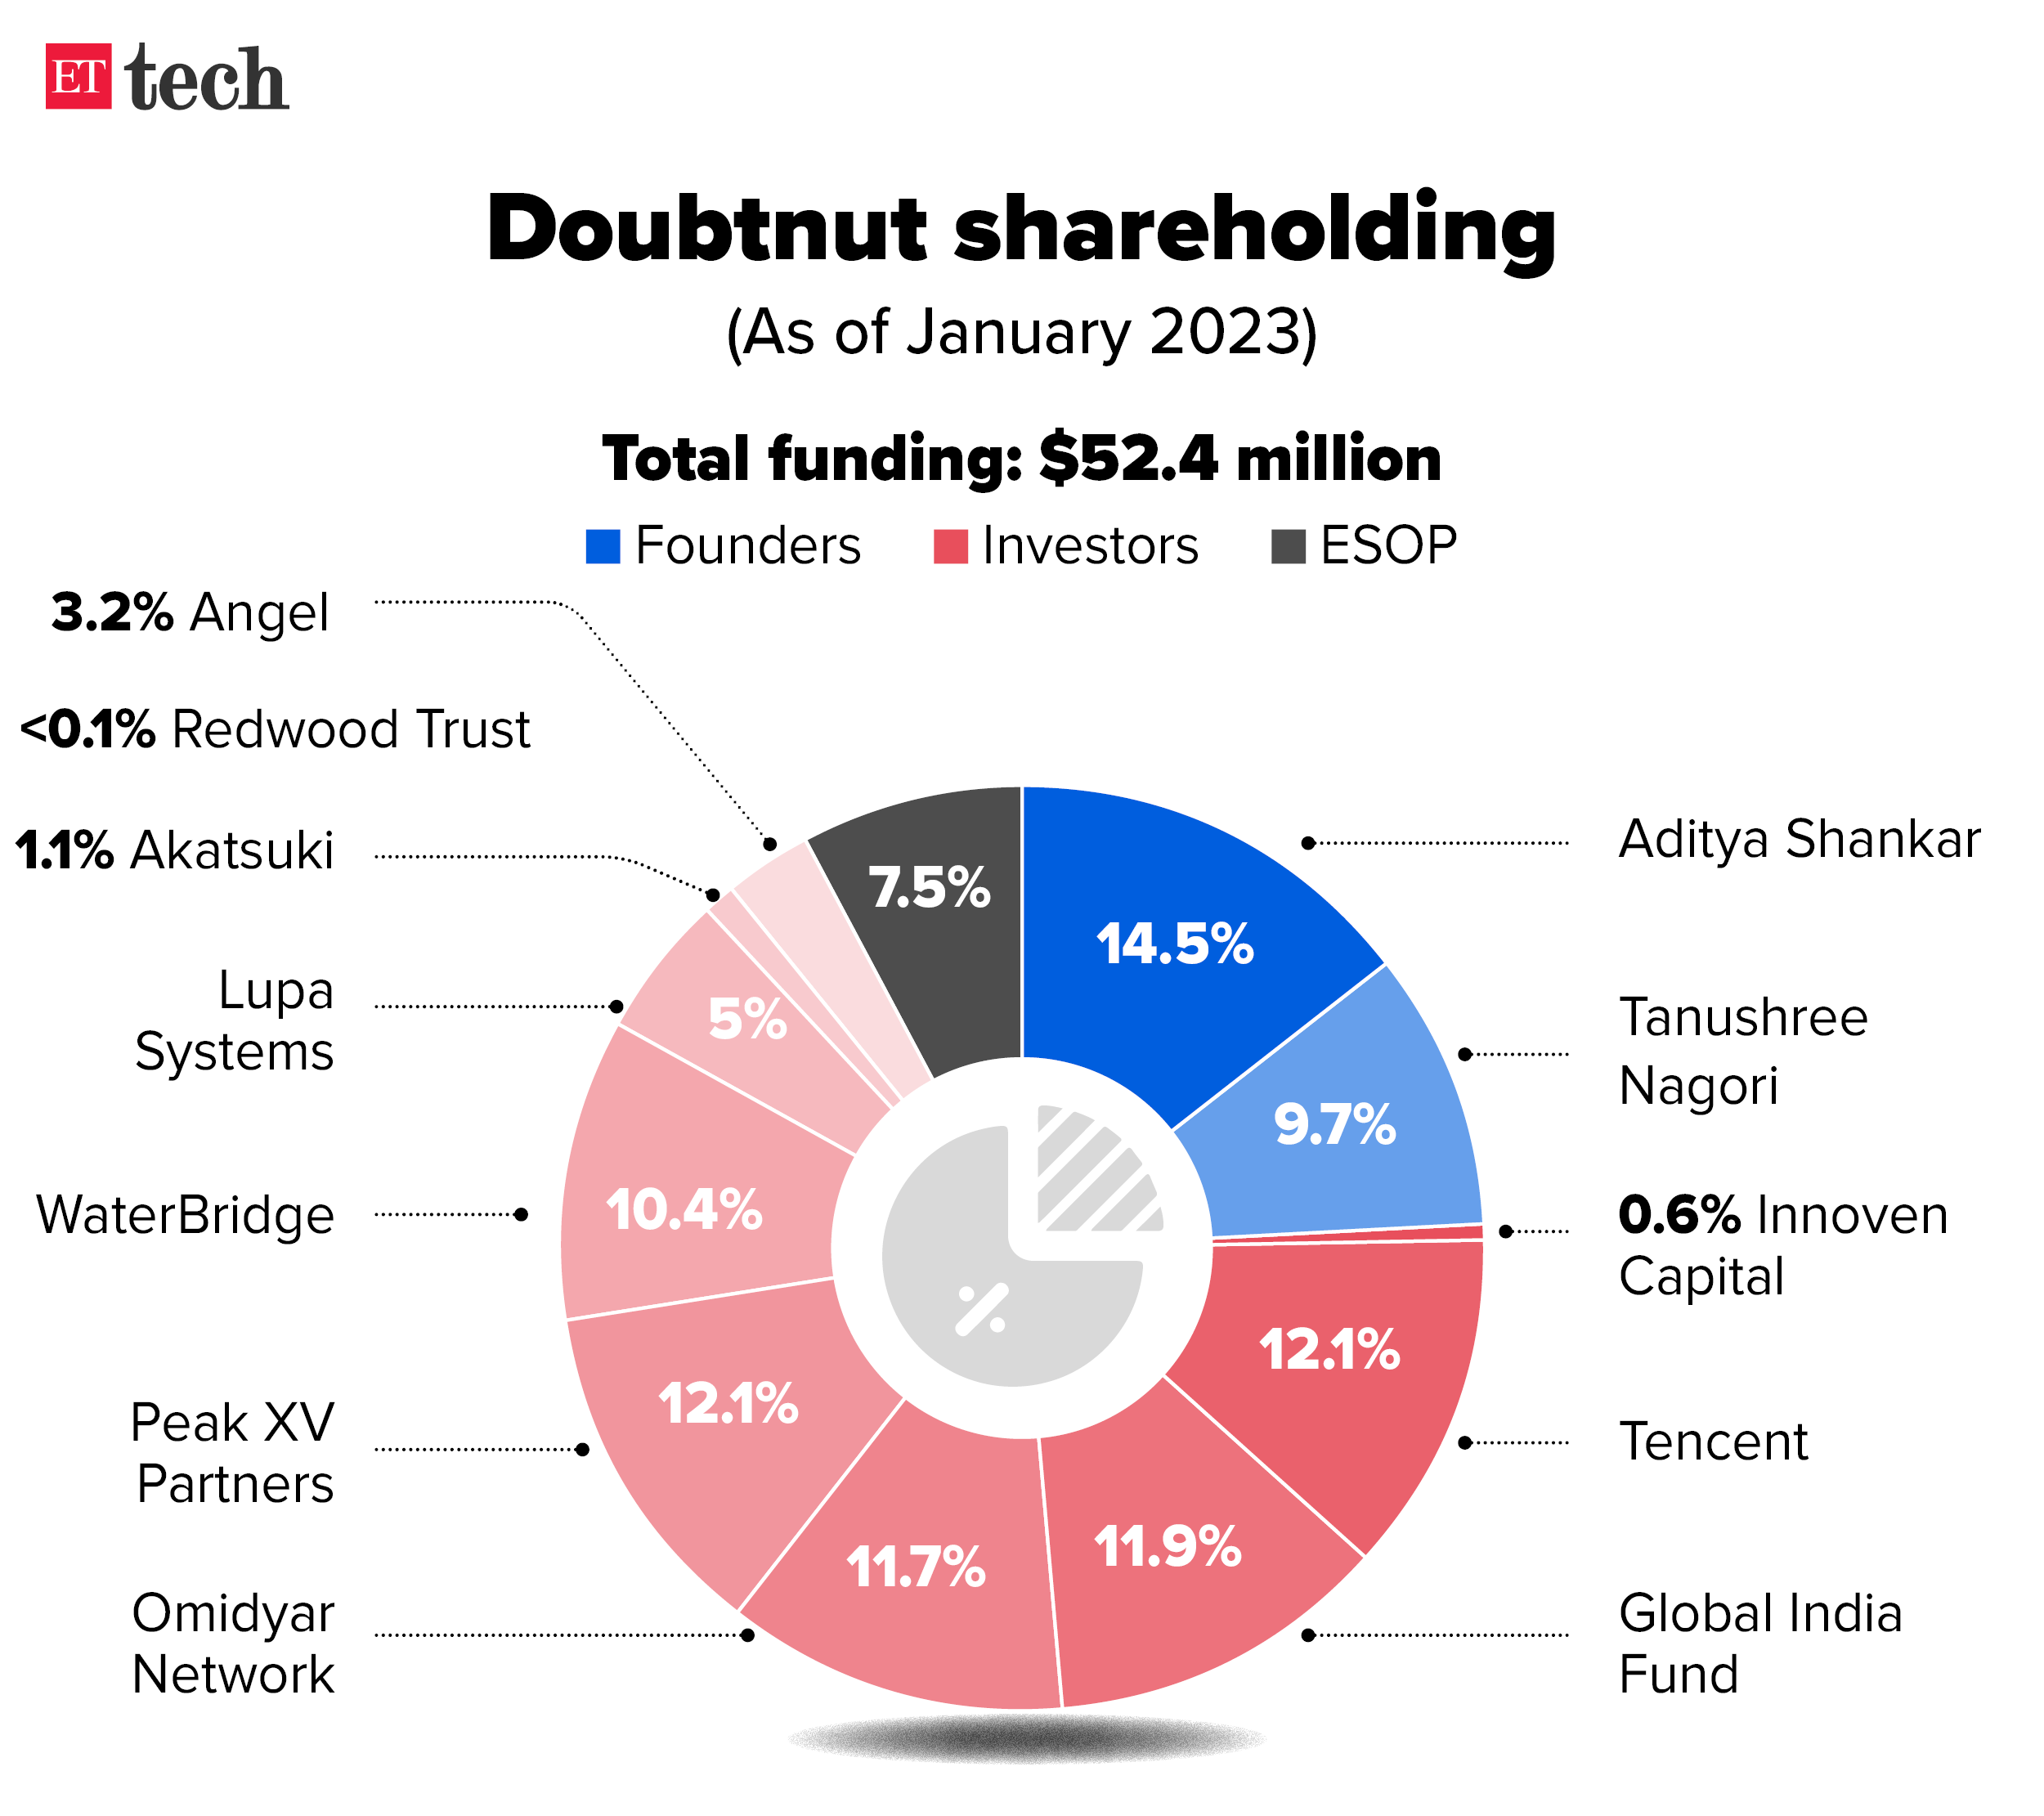 Doubtnut shareholding as of January 2023